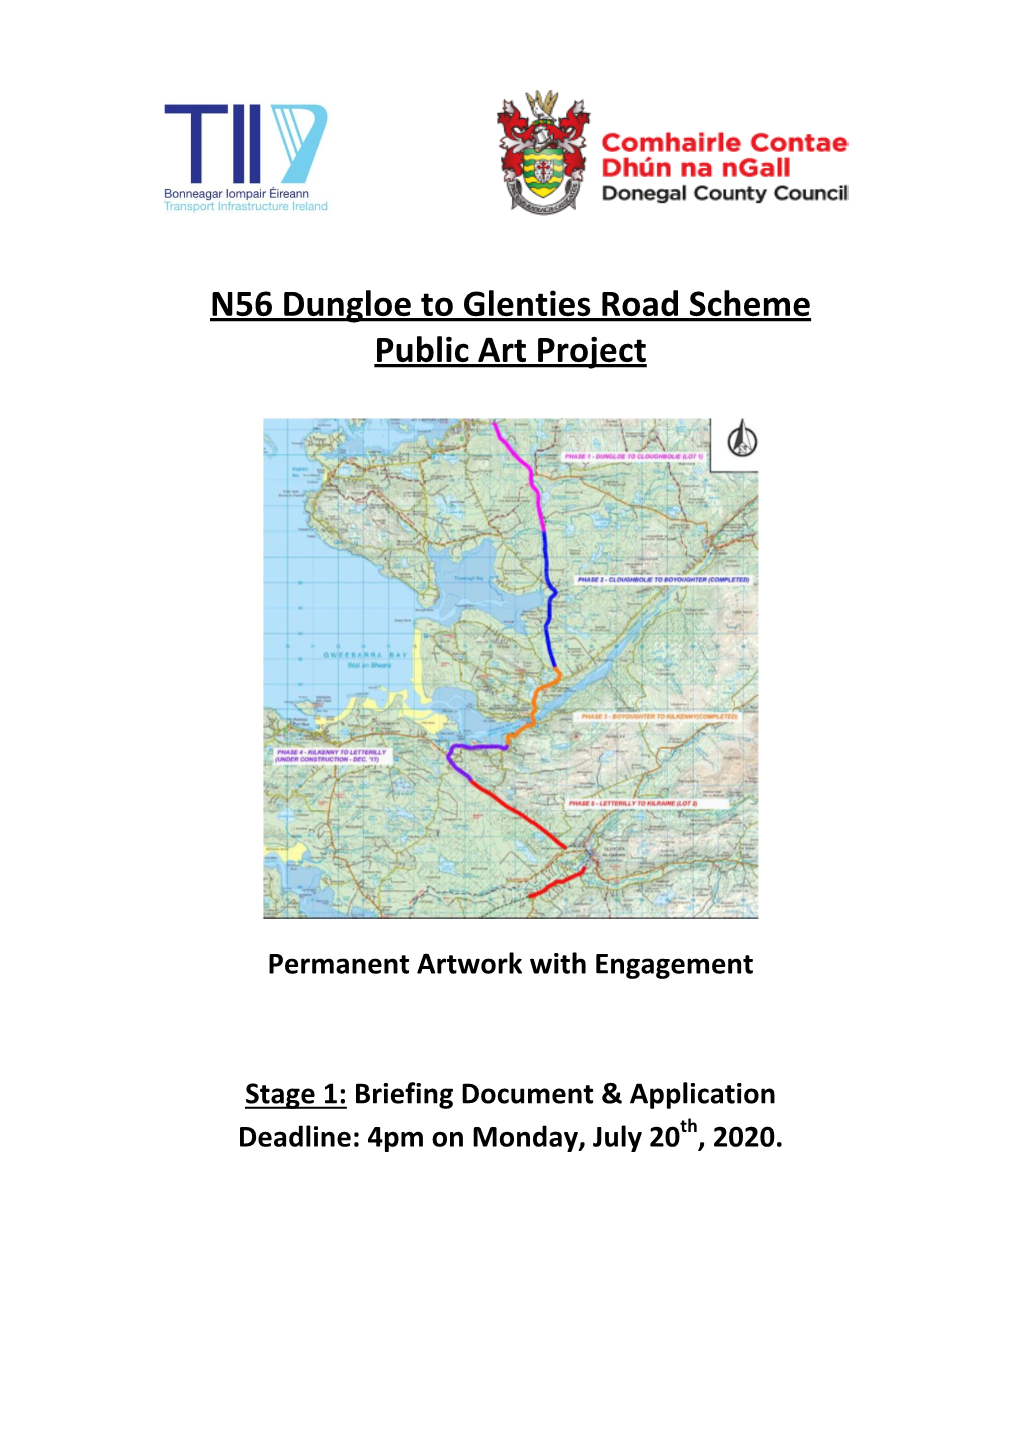 N56 Dungloe to Glenties Road Scheme Public Art Project